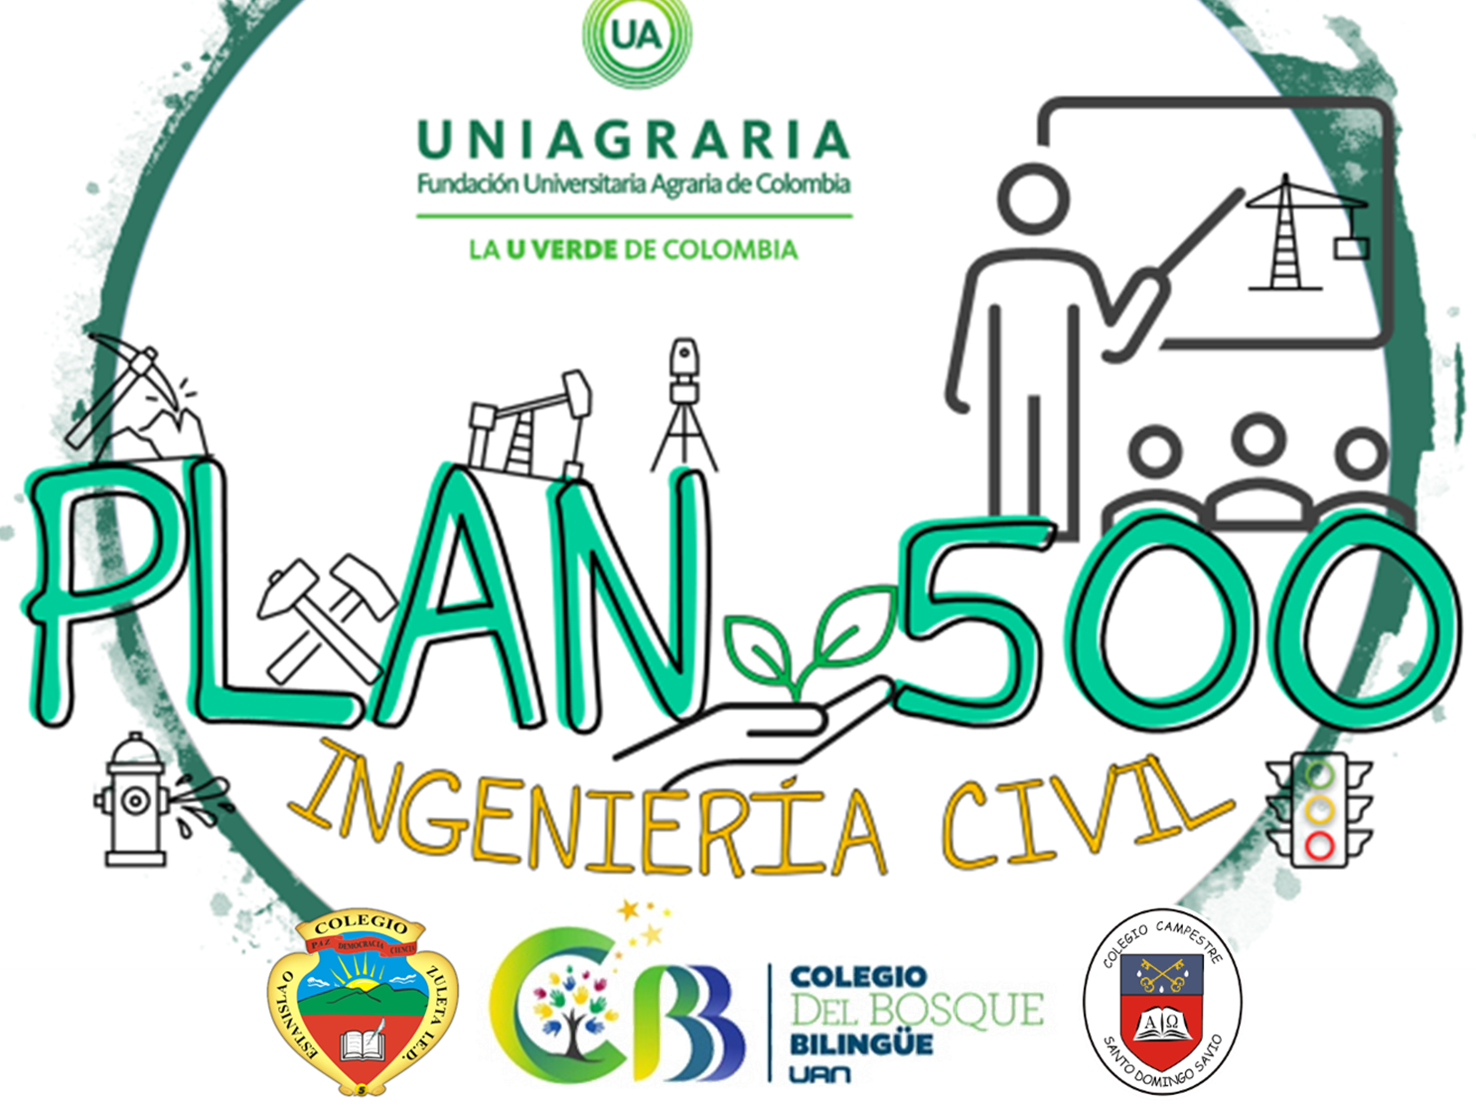 PLAN 500 EN EL PROGRAMA DE INGENIERIA CIVIL